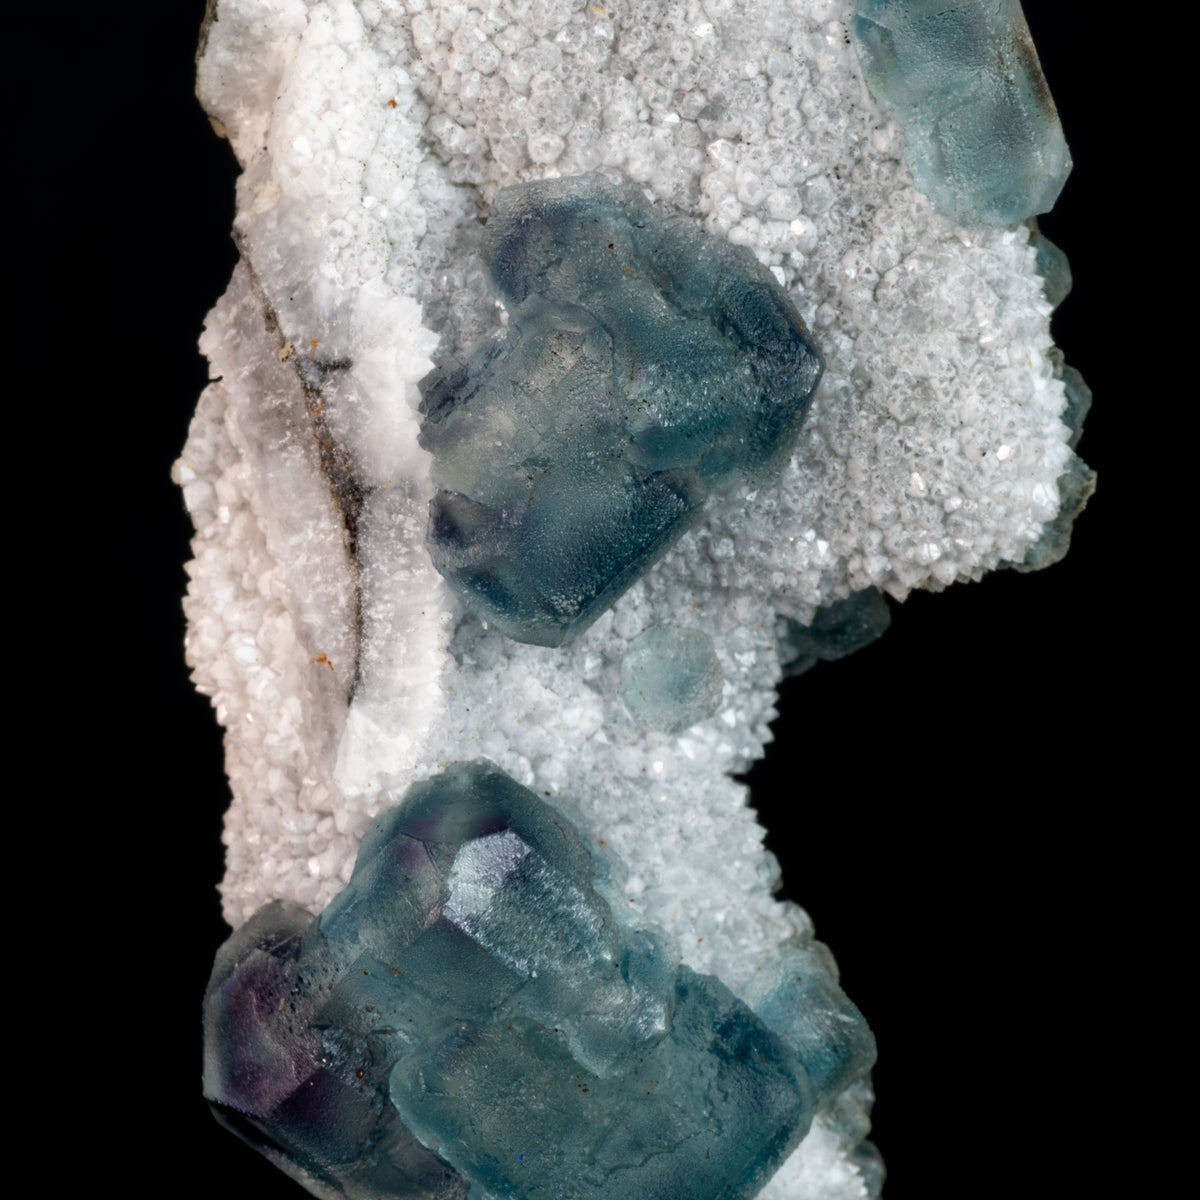 Aqua Blue Fluorite druzy 80g